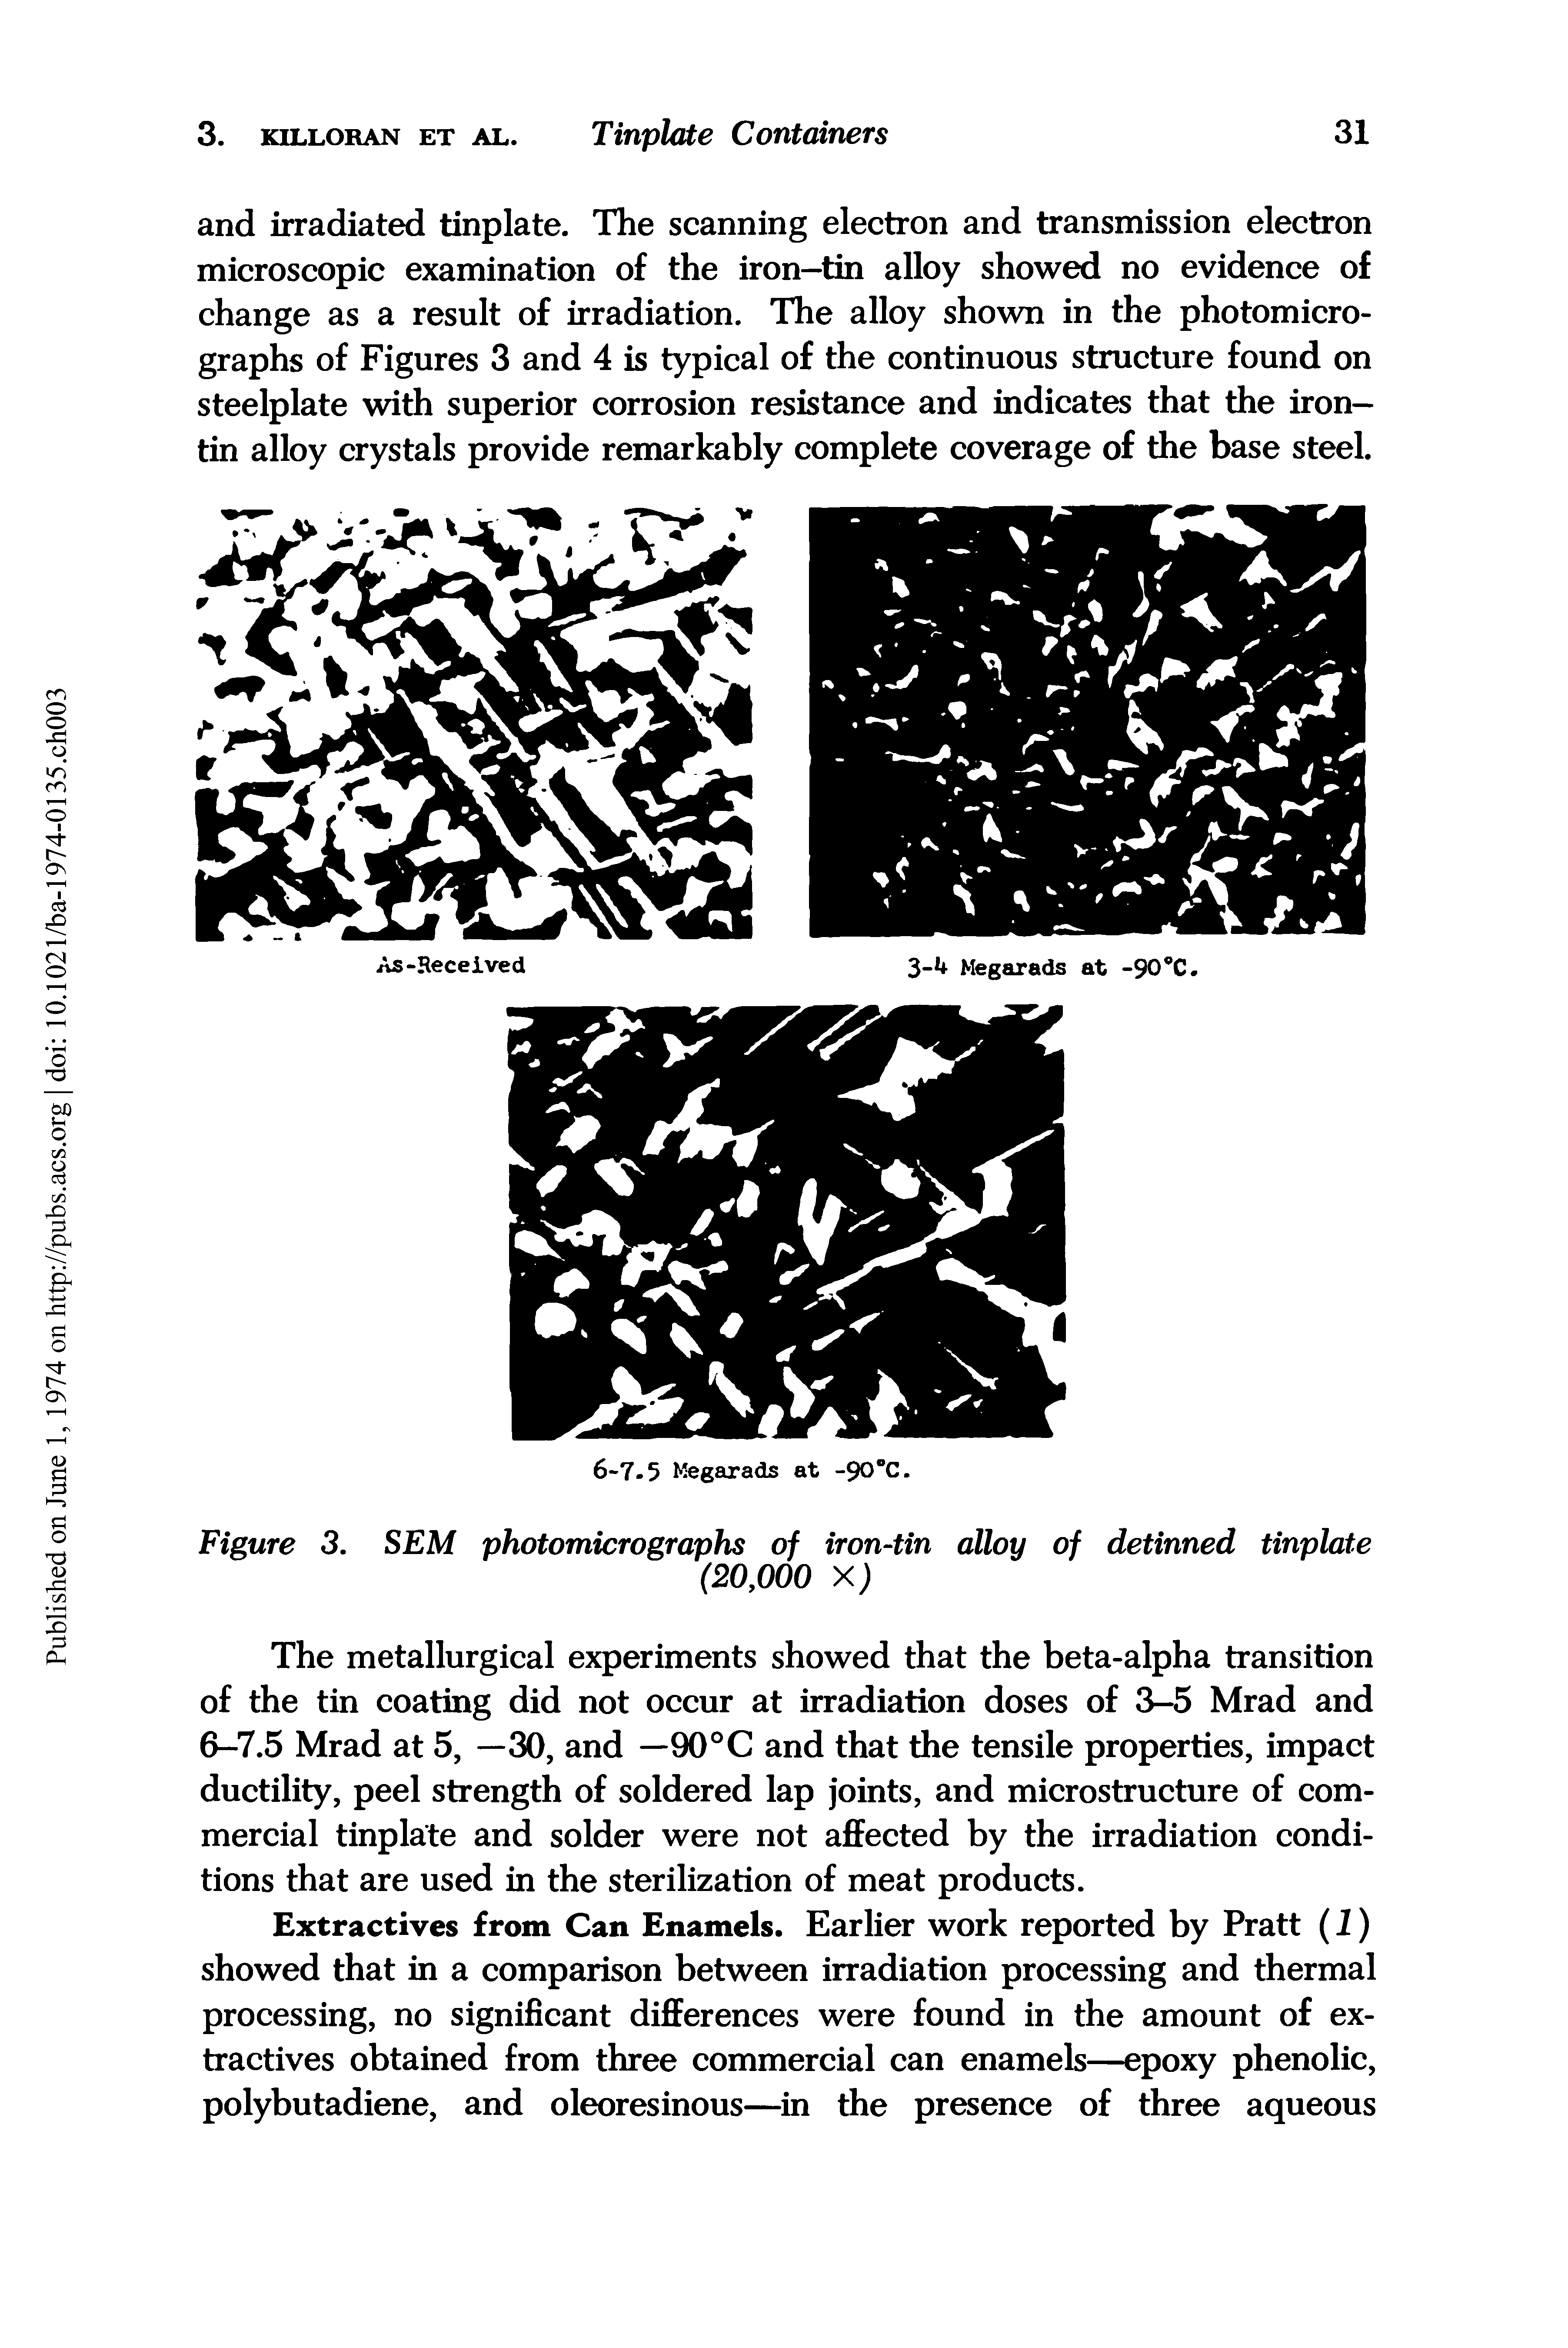 Figure 3. SEM photomicrographs of iron-tin alloy of detinned tinplate...